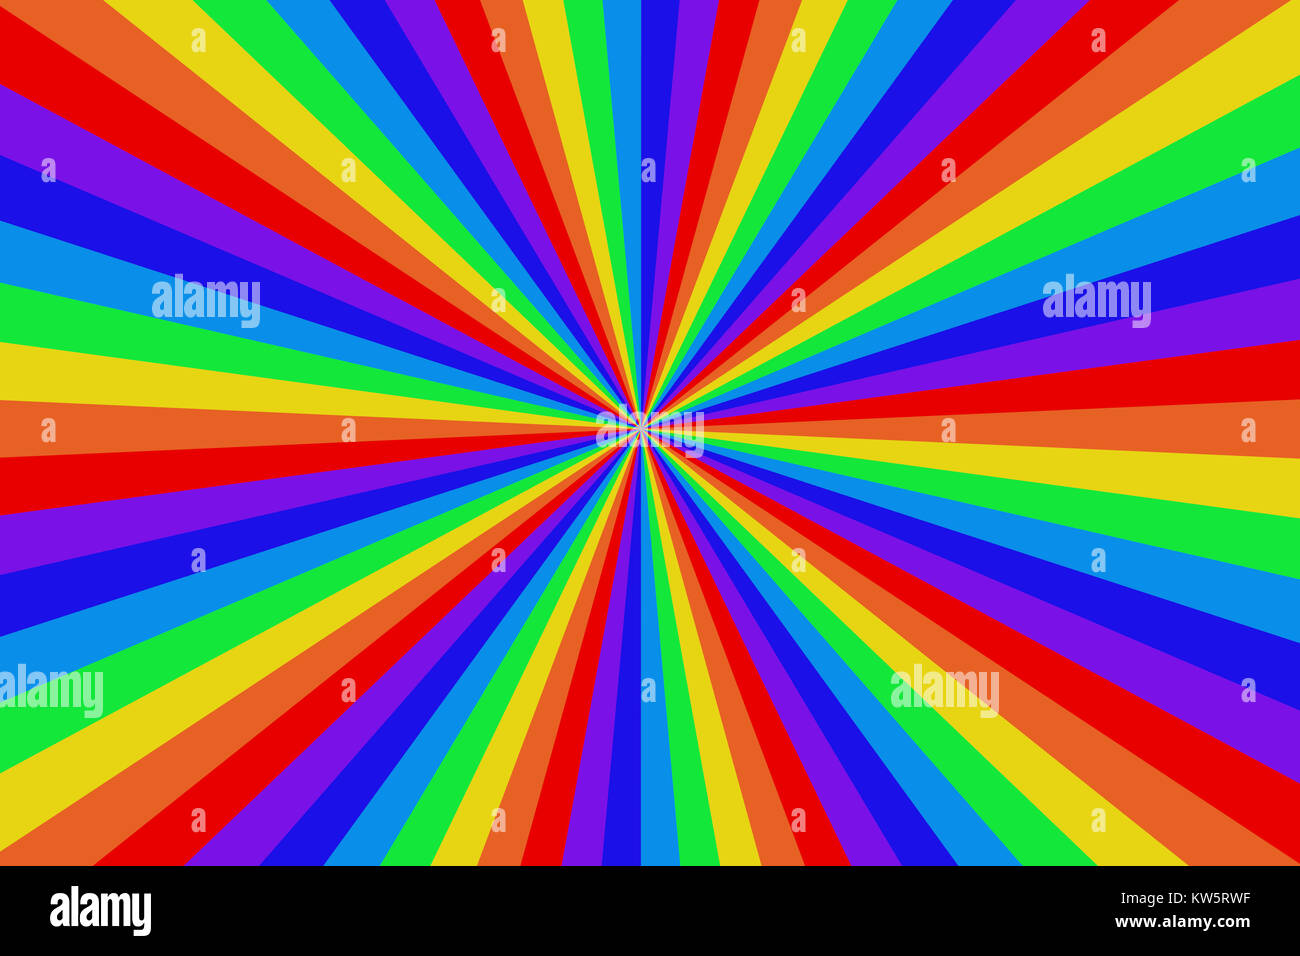 Radiating rainbow colored line background Stock Photo